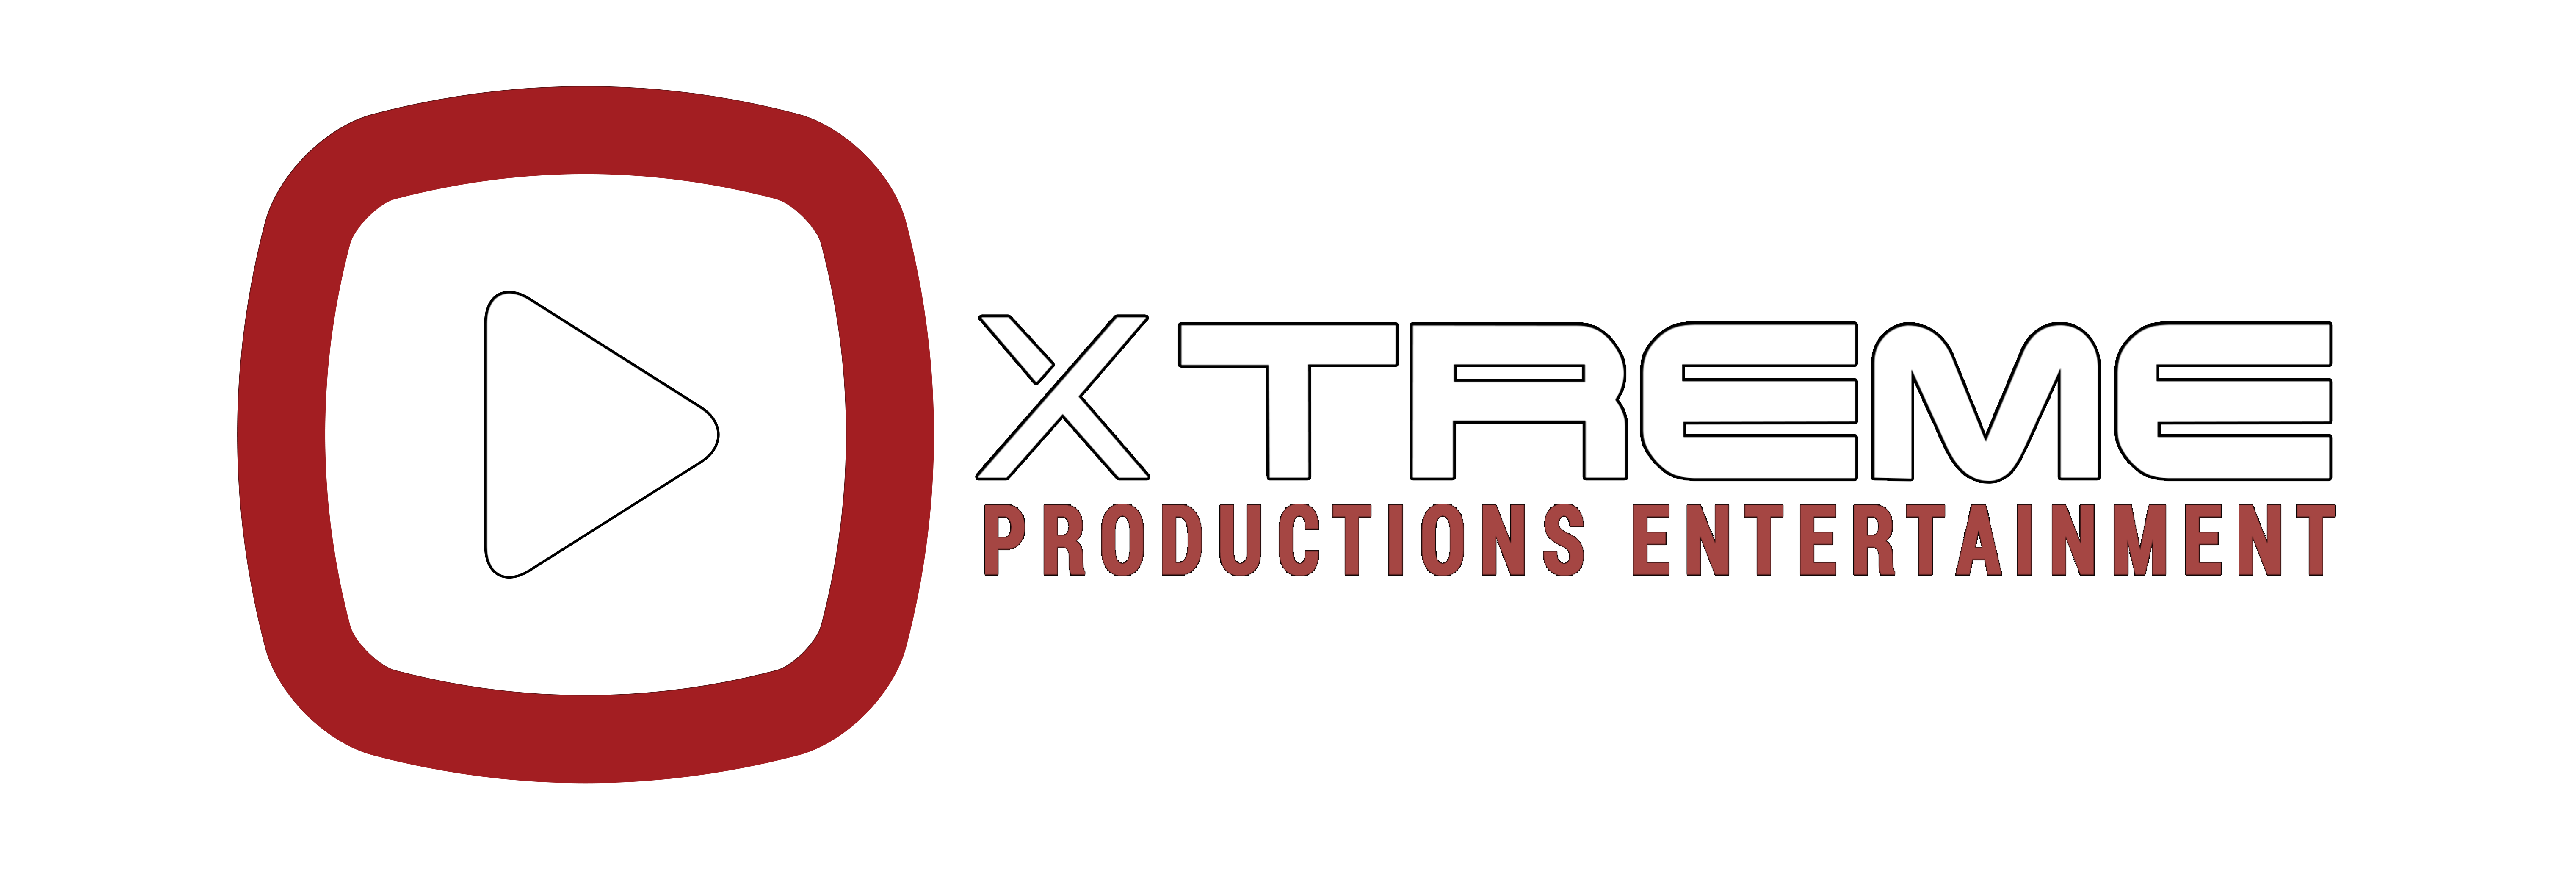 Xtreme Productions Entertainment